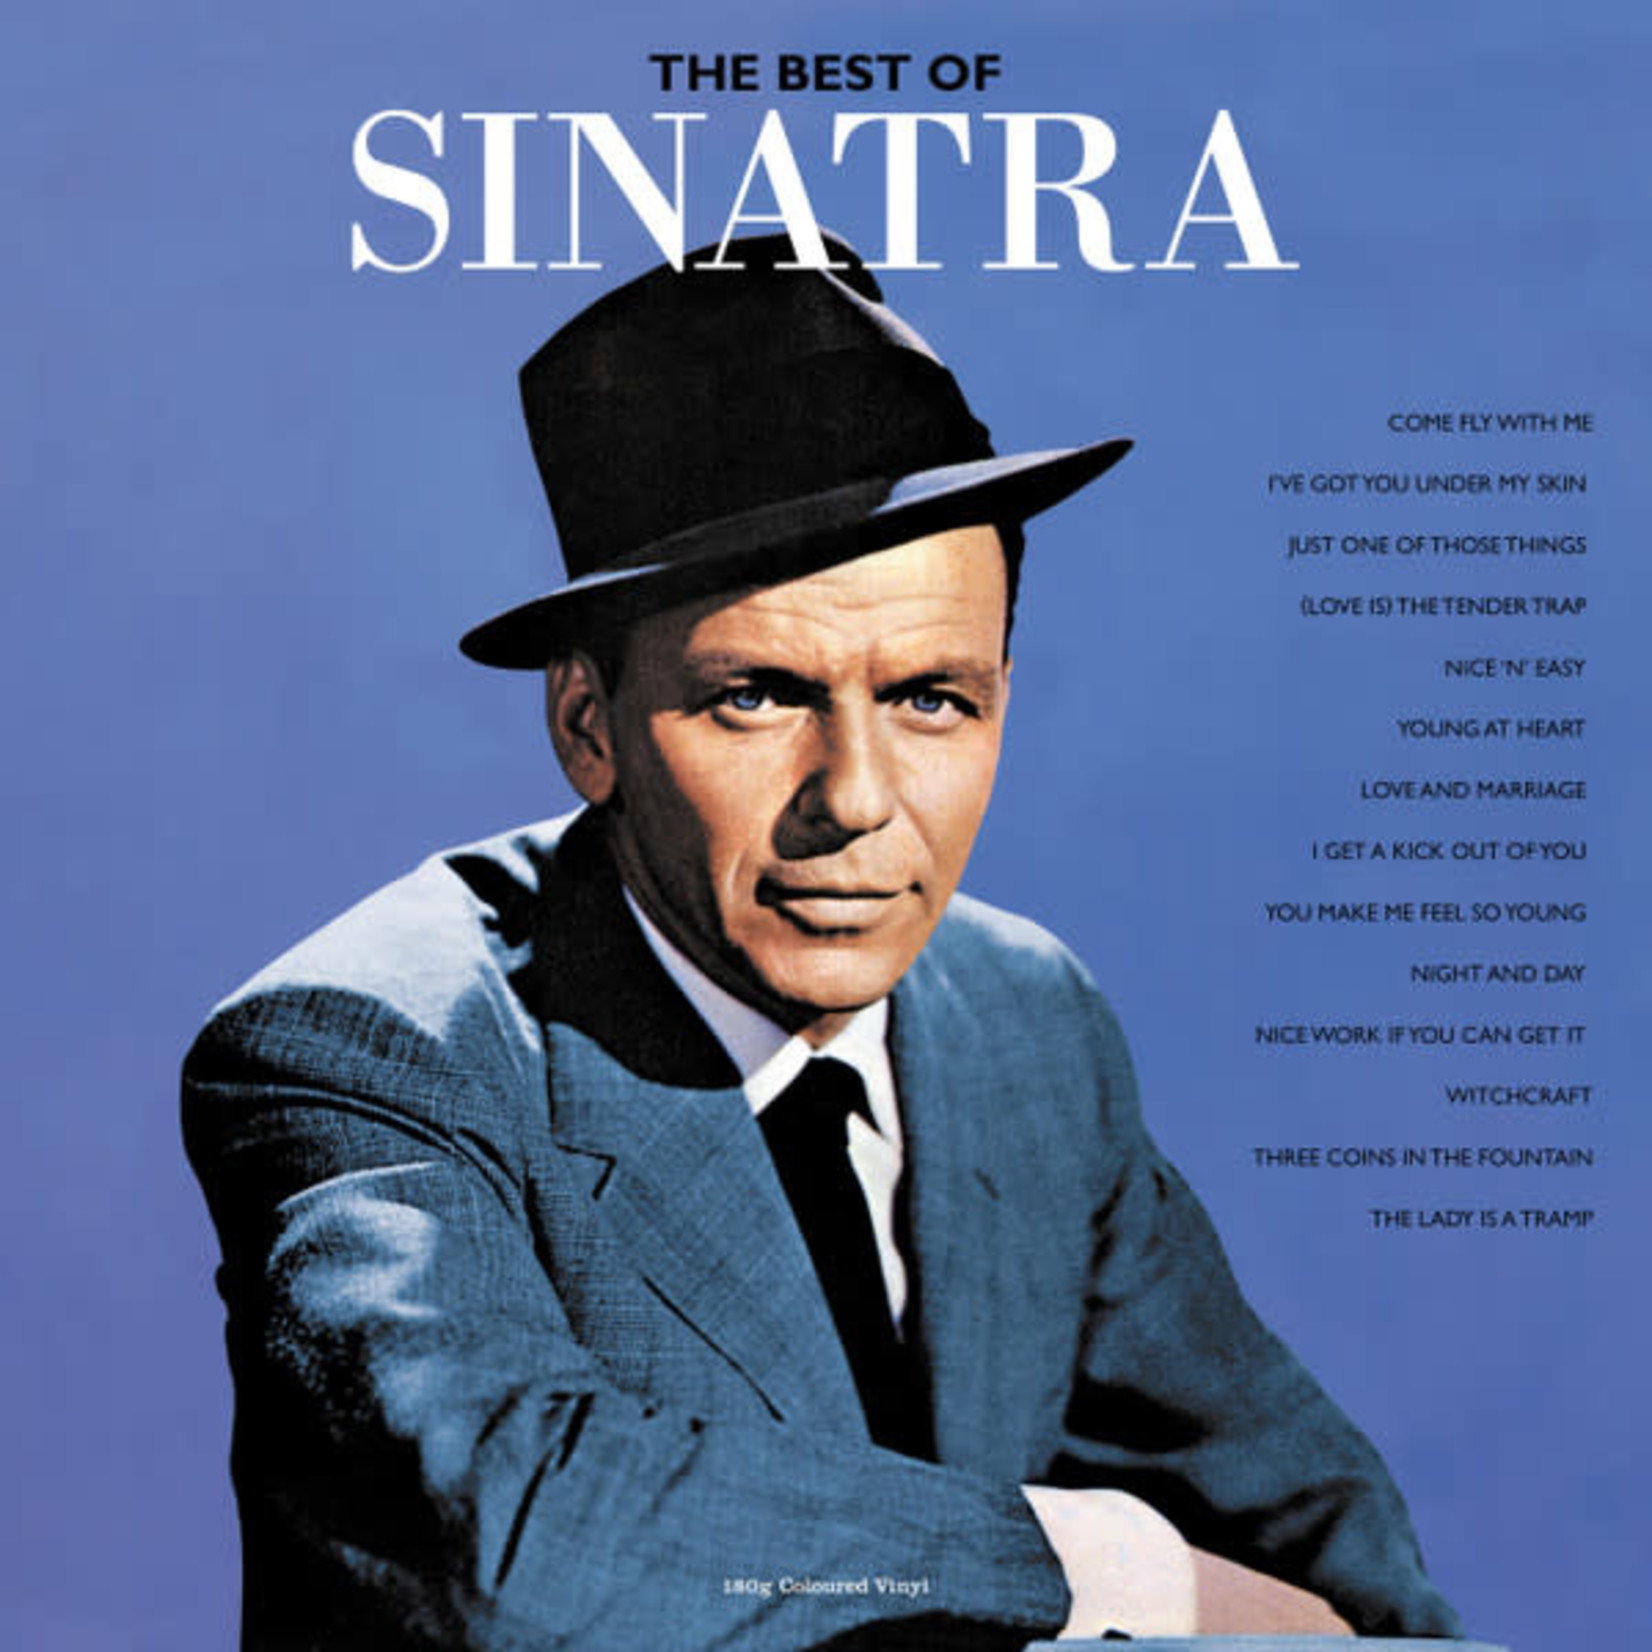 [New] Frank Sinatra - The Best of Sinatra (coloured vinyl)